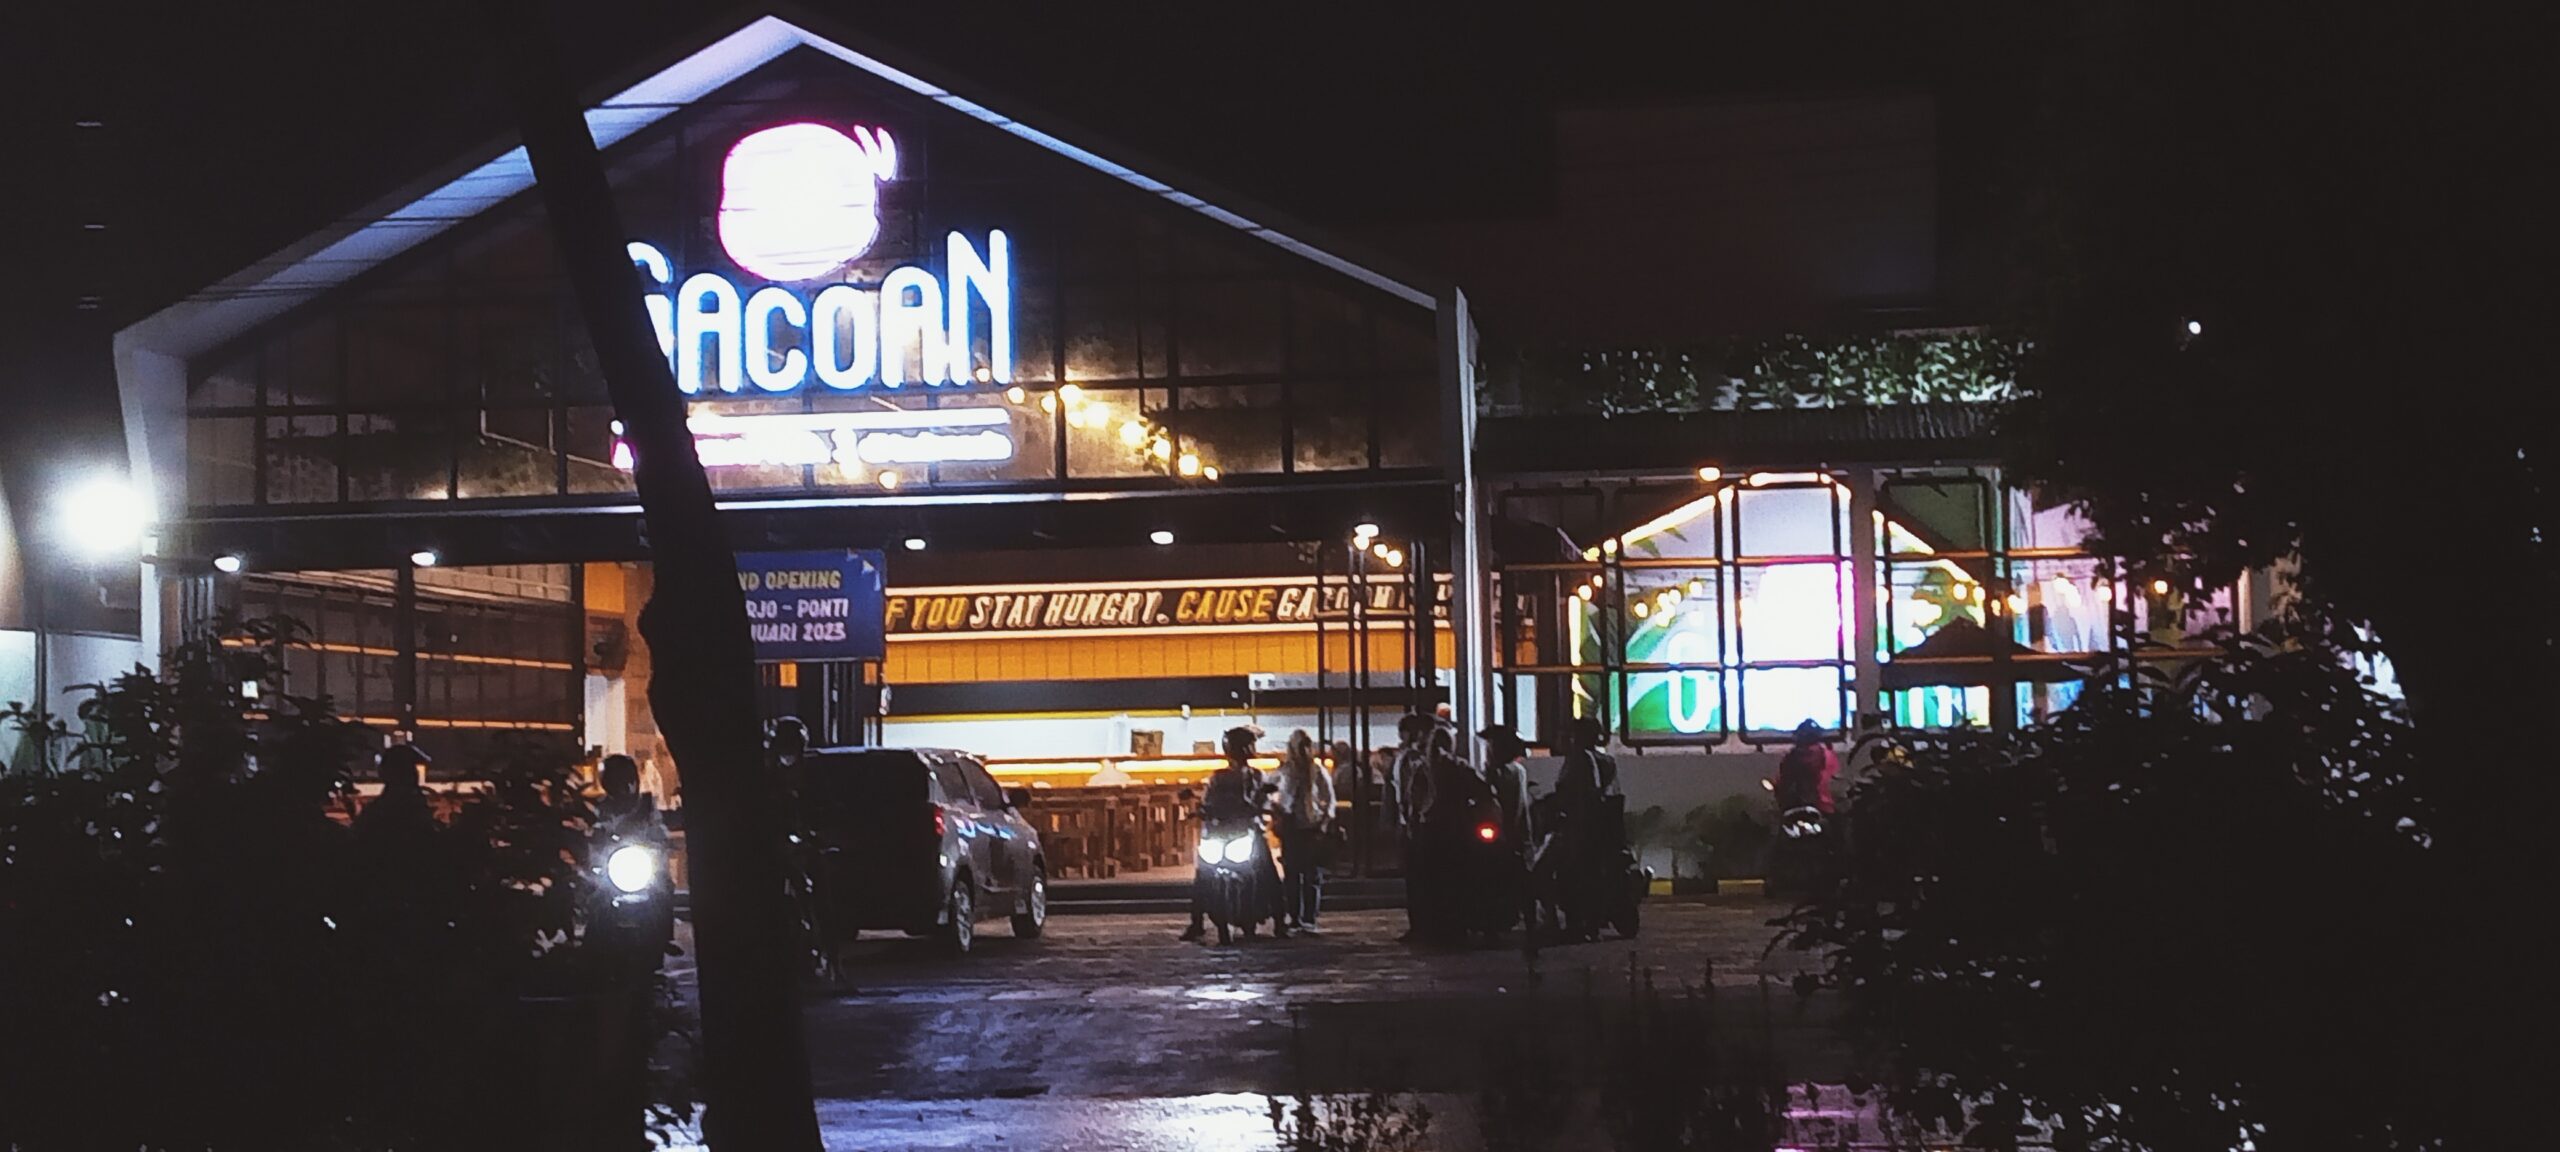 Kondisi area Mie Gacoan Jl. Raya Ponti yang kondusif hingga malam hari